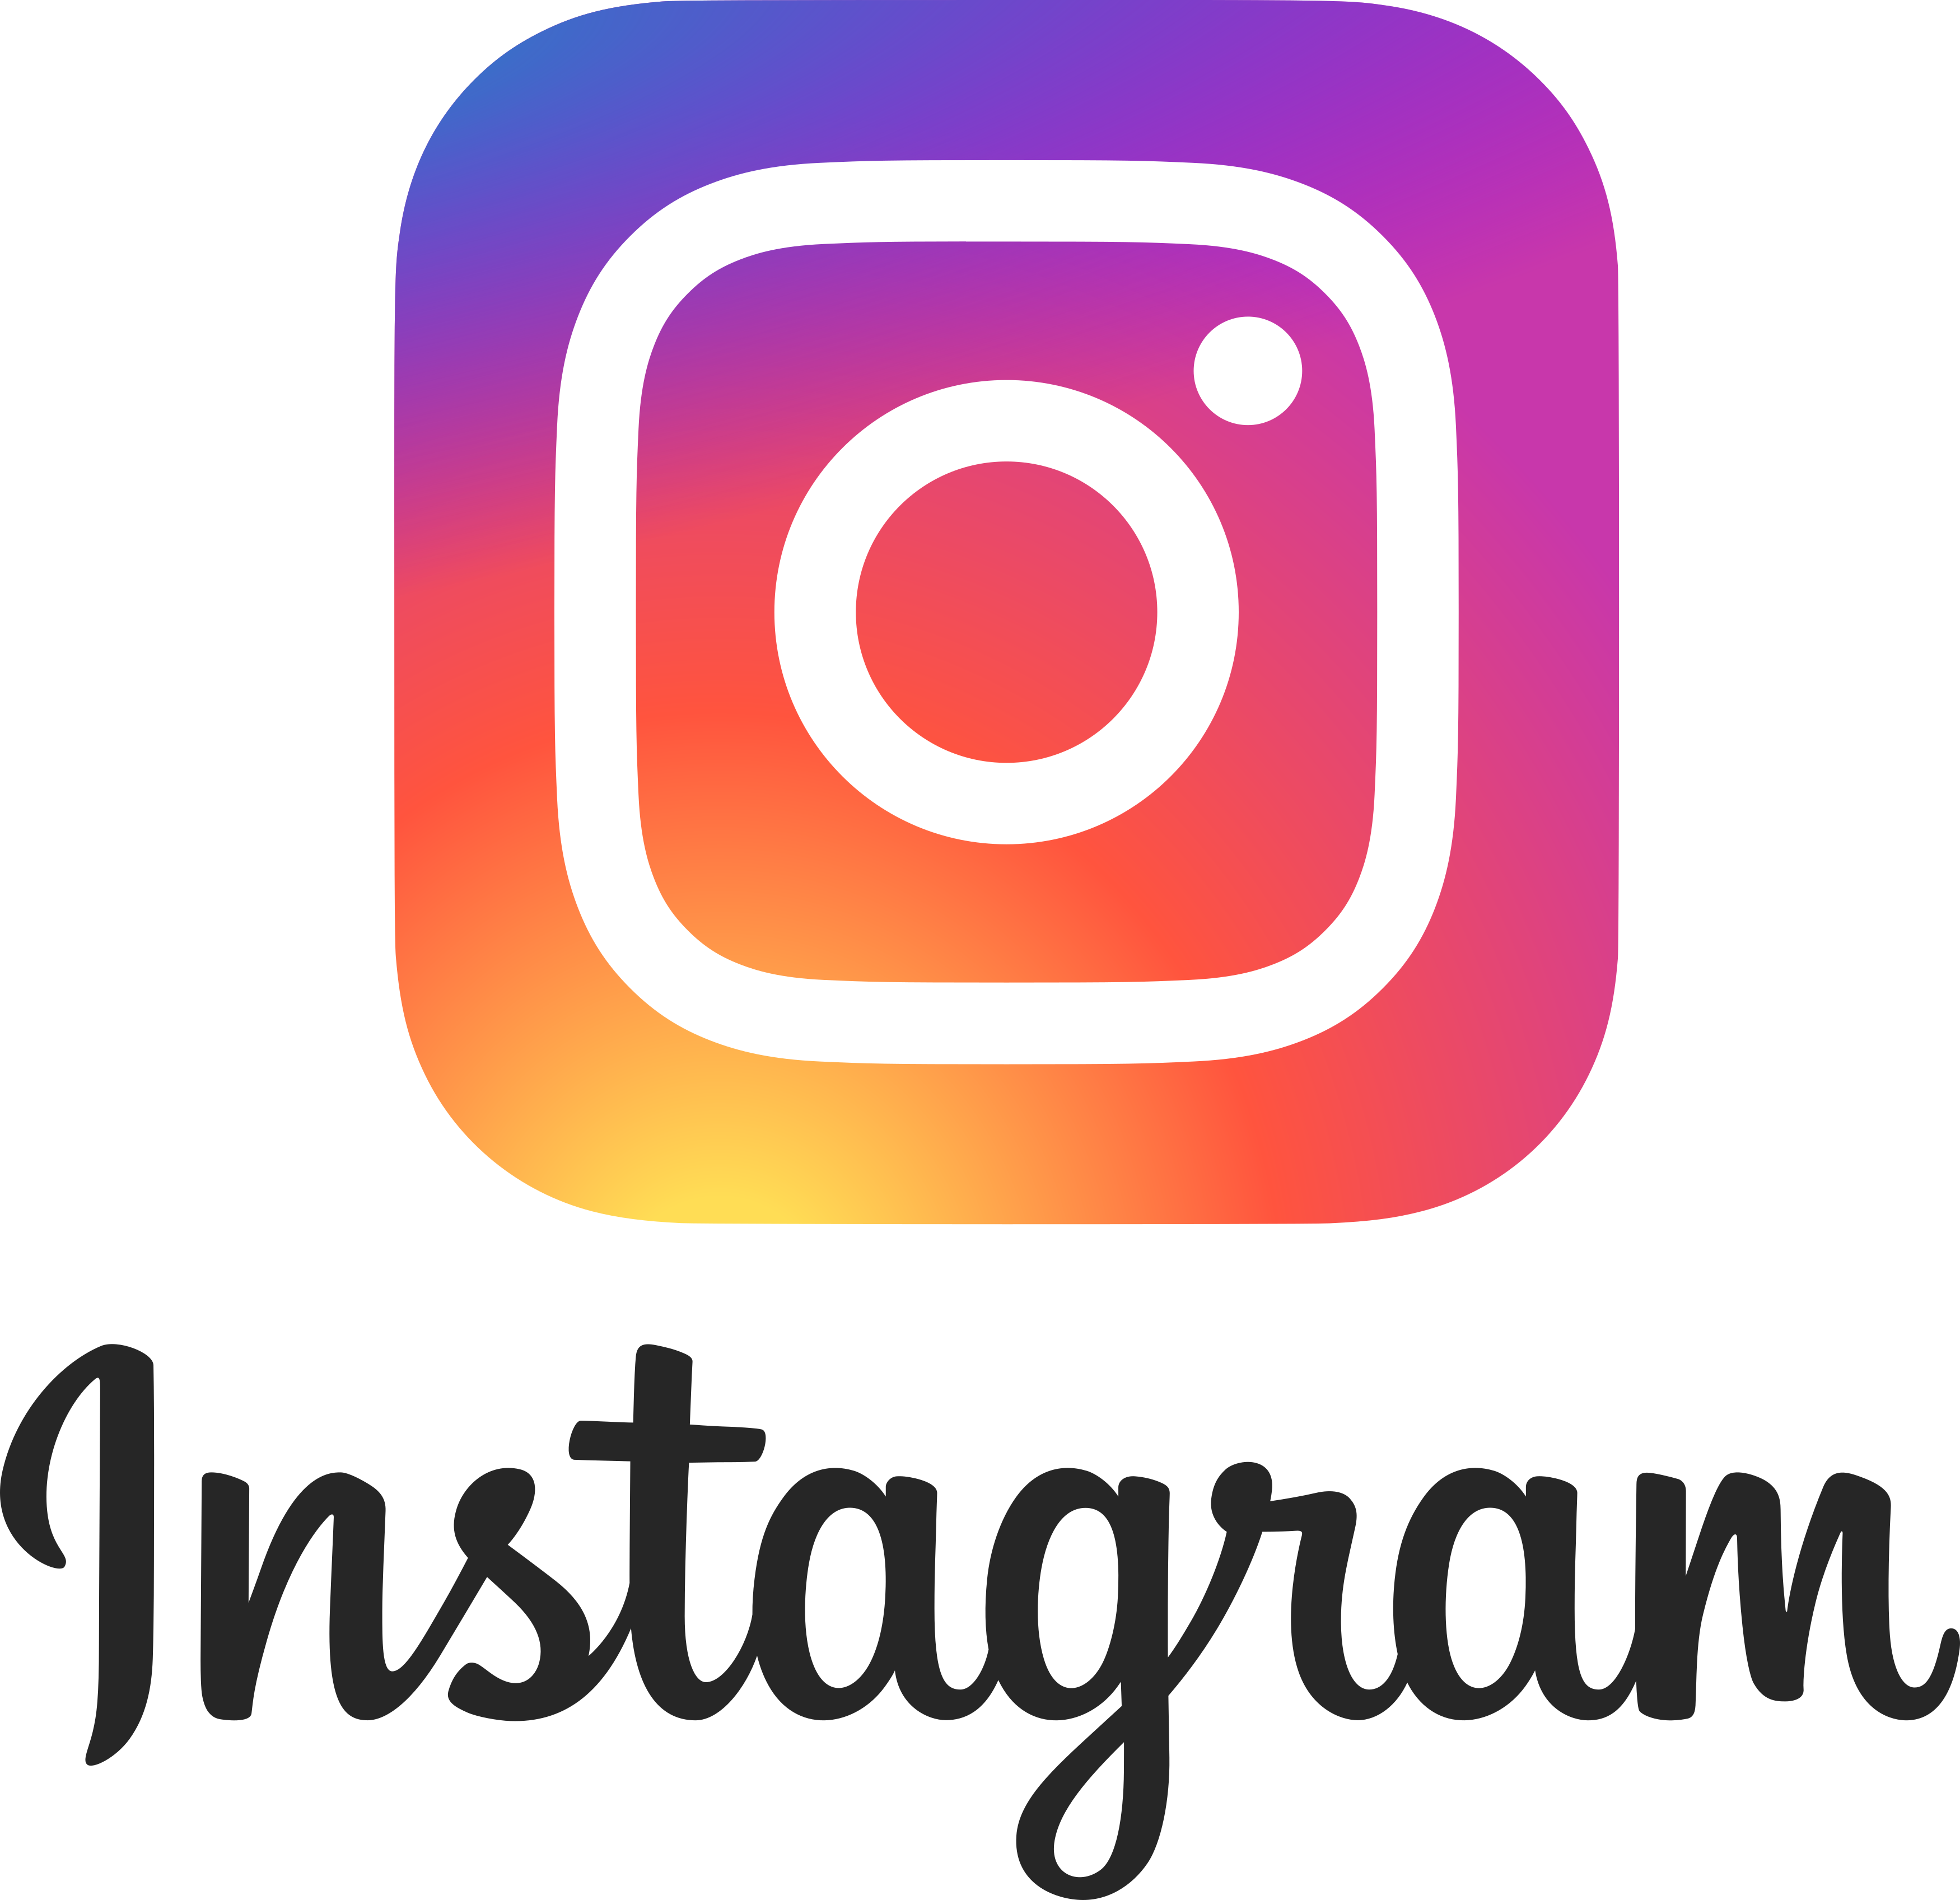 Logo de Instagram PNG Fotos